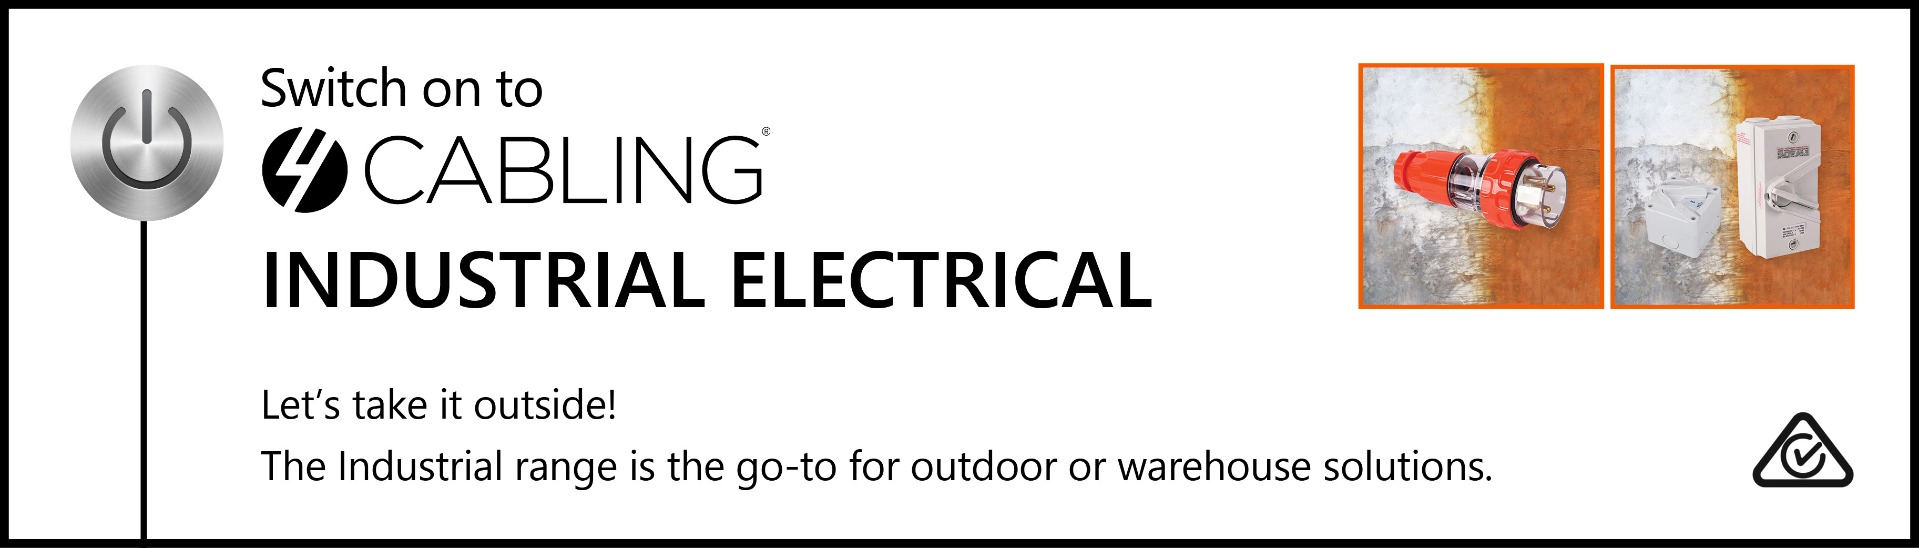 4Cabling Industrial Electrical Range